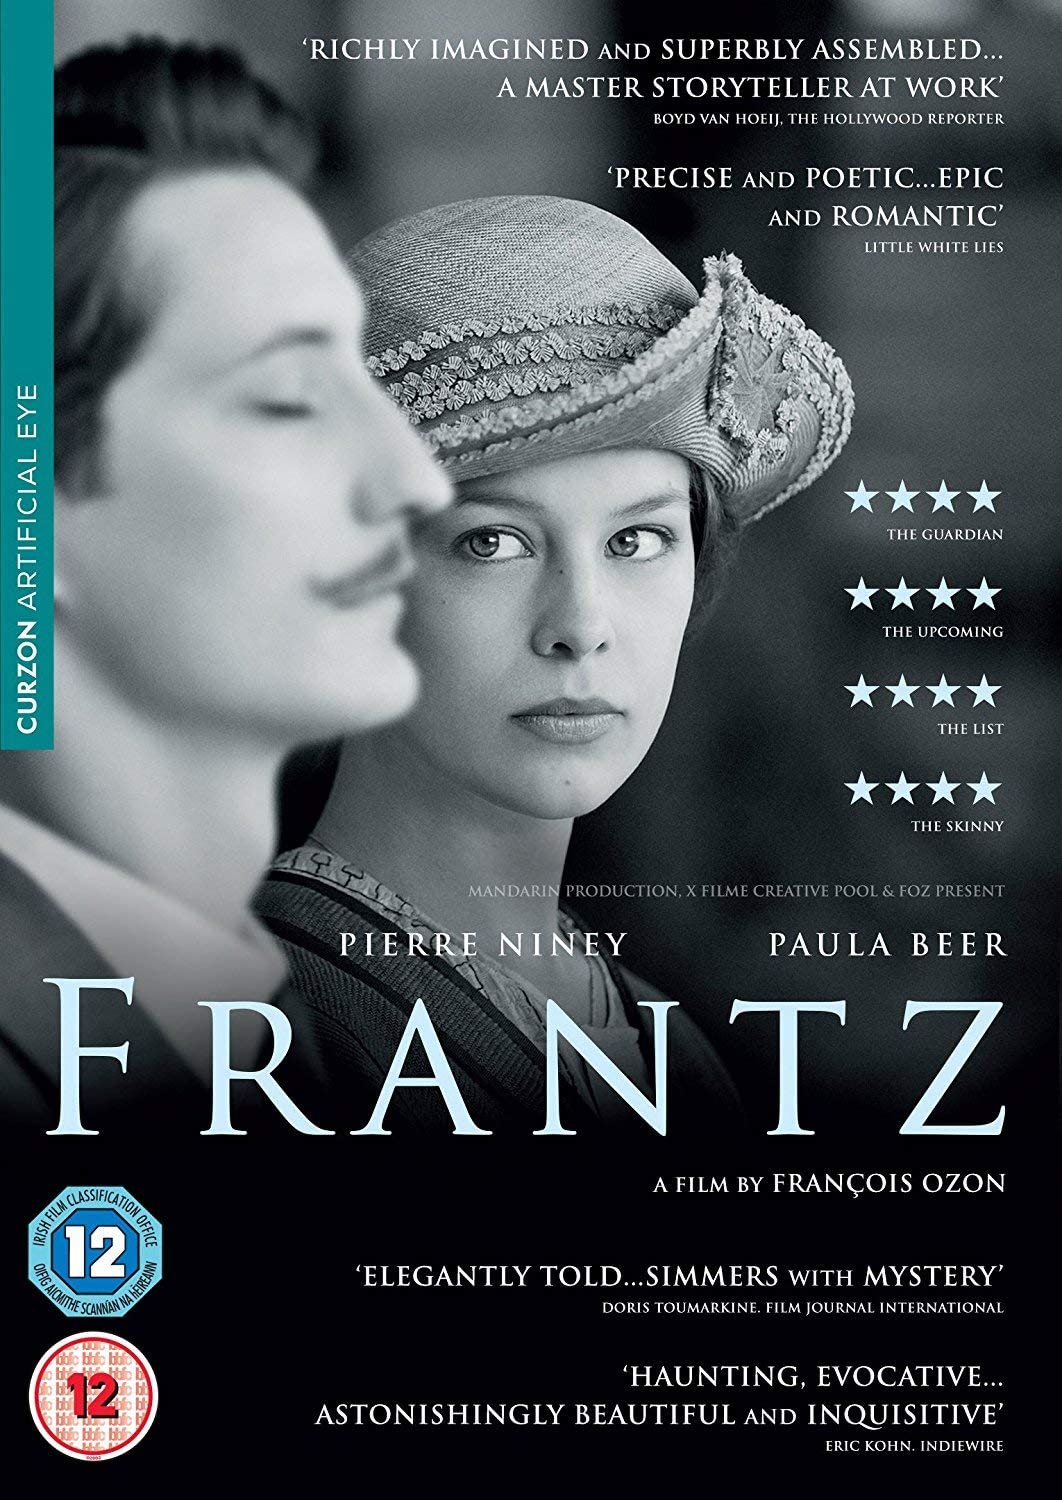 Frantz - Drama/Romance [DVD]